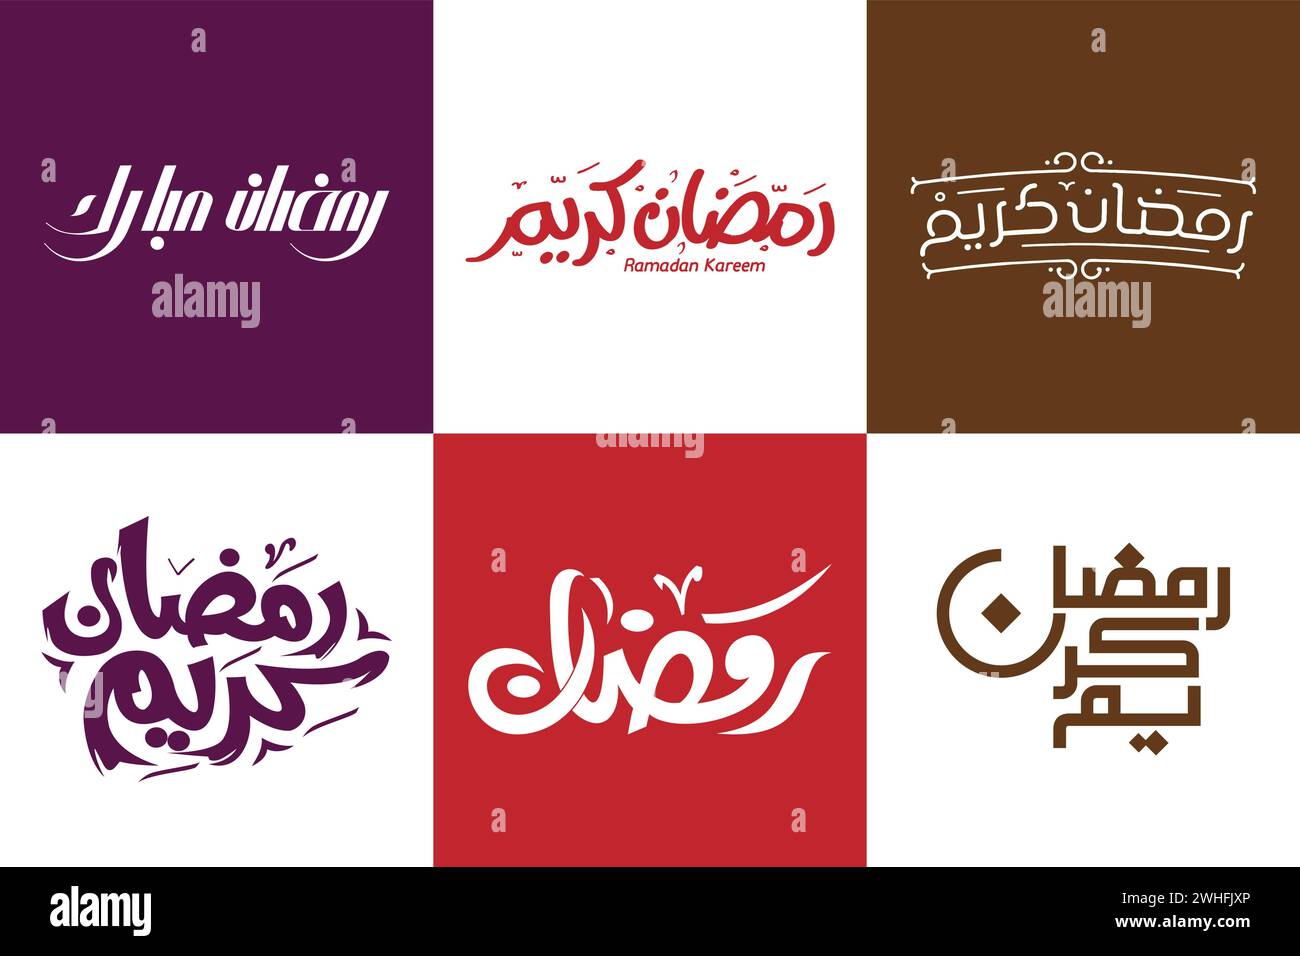 ramadan kareem Calligraphy, Ramzan Mubarak, Caligraphy, islamic calligraphy, Ayat Kareem, quran ayat, Translation: Ramadan mubarak calligraphy Stock Vector